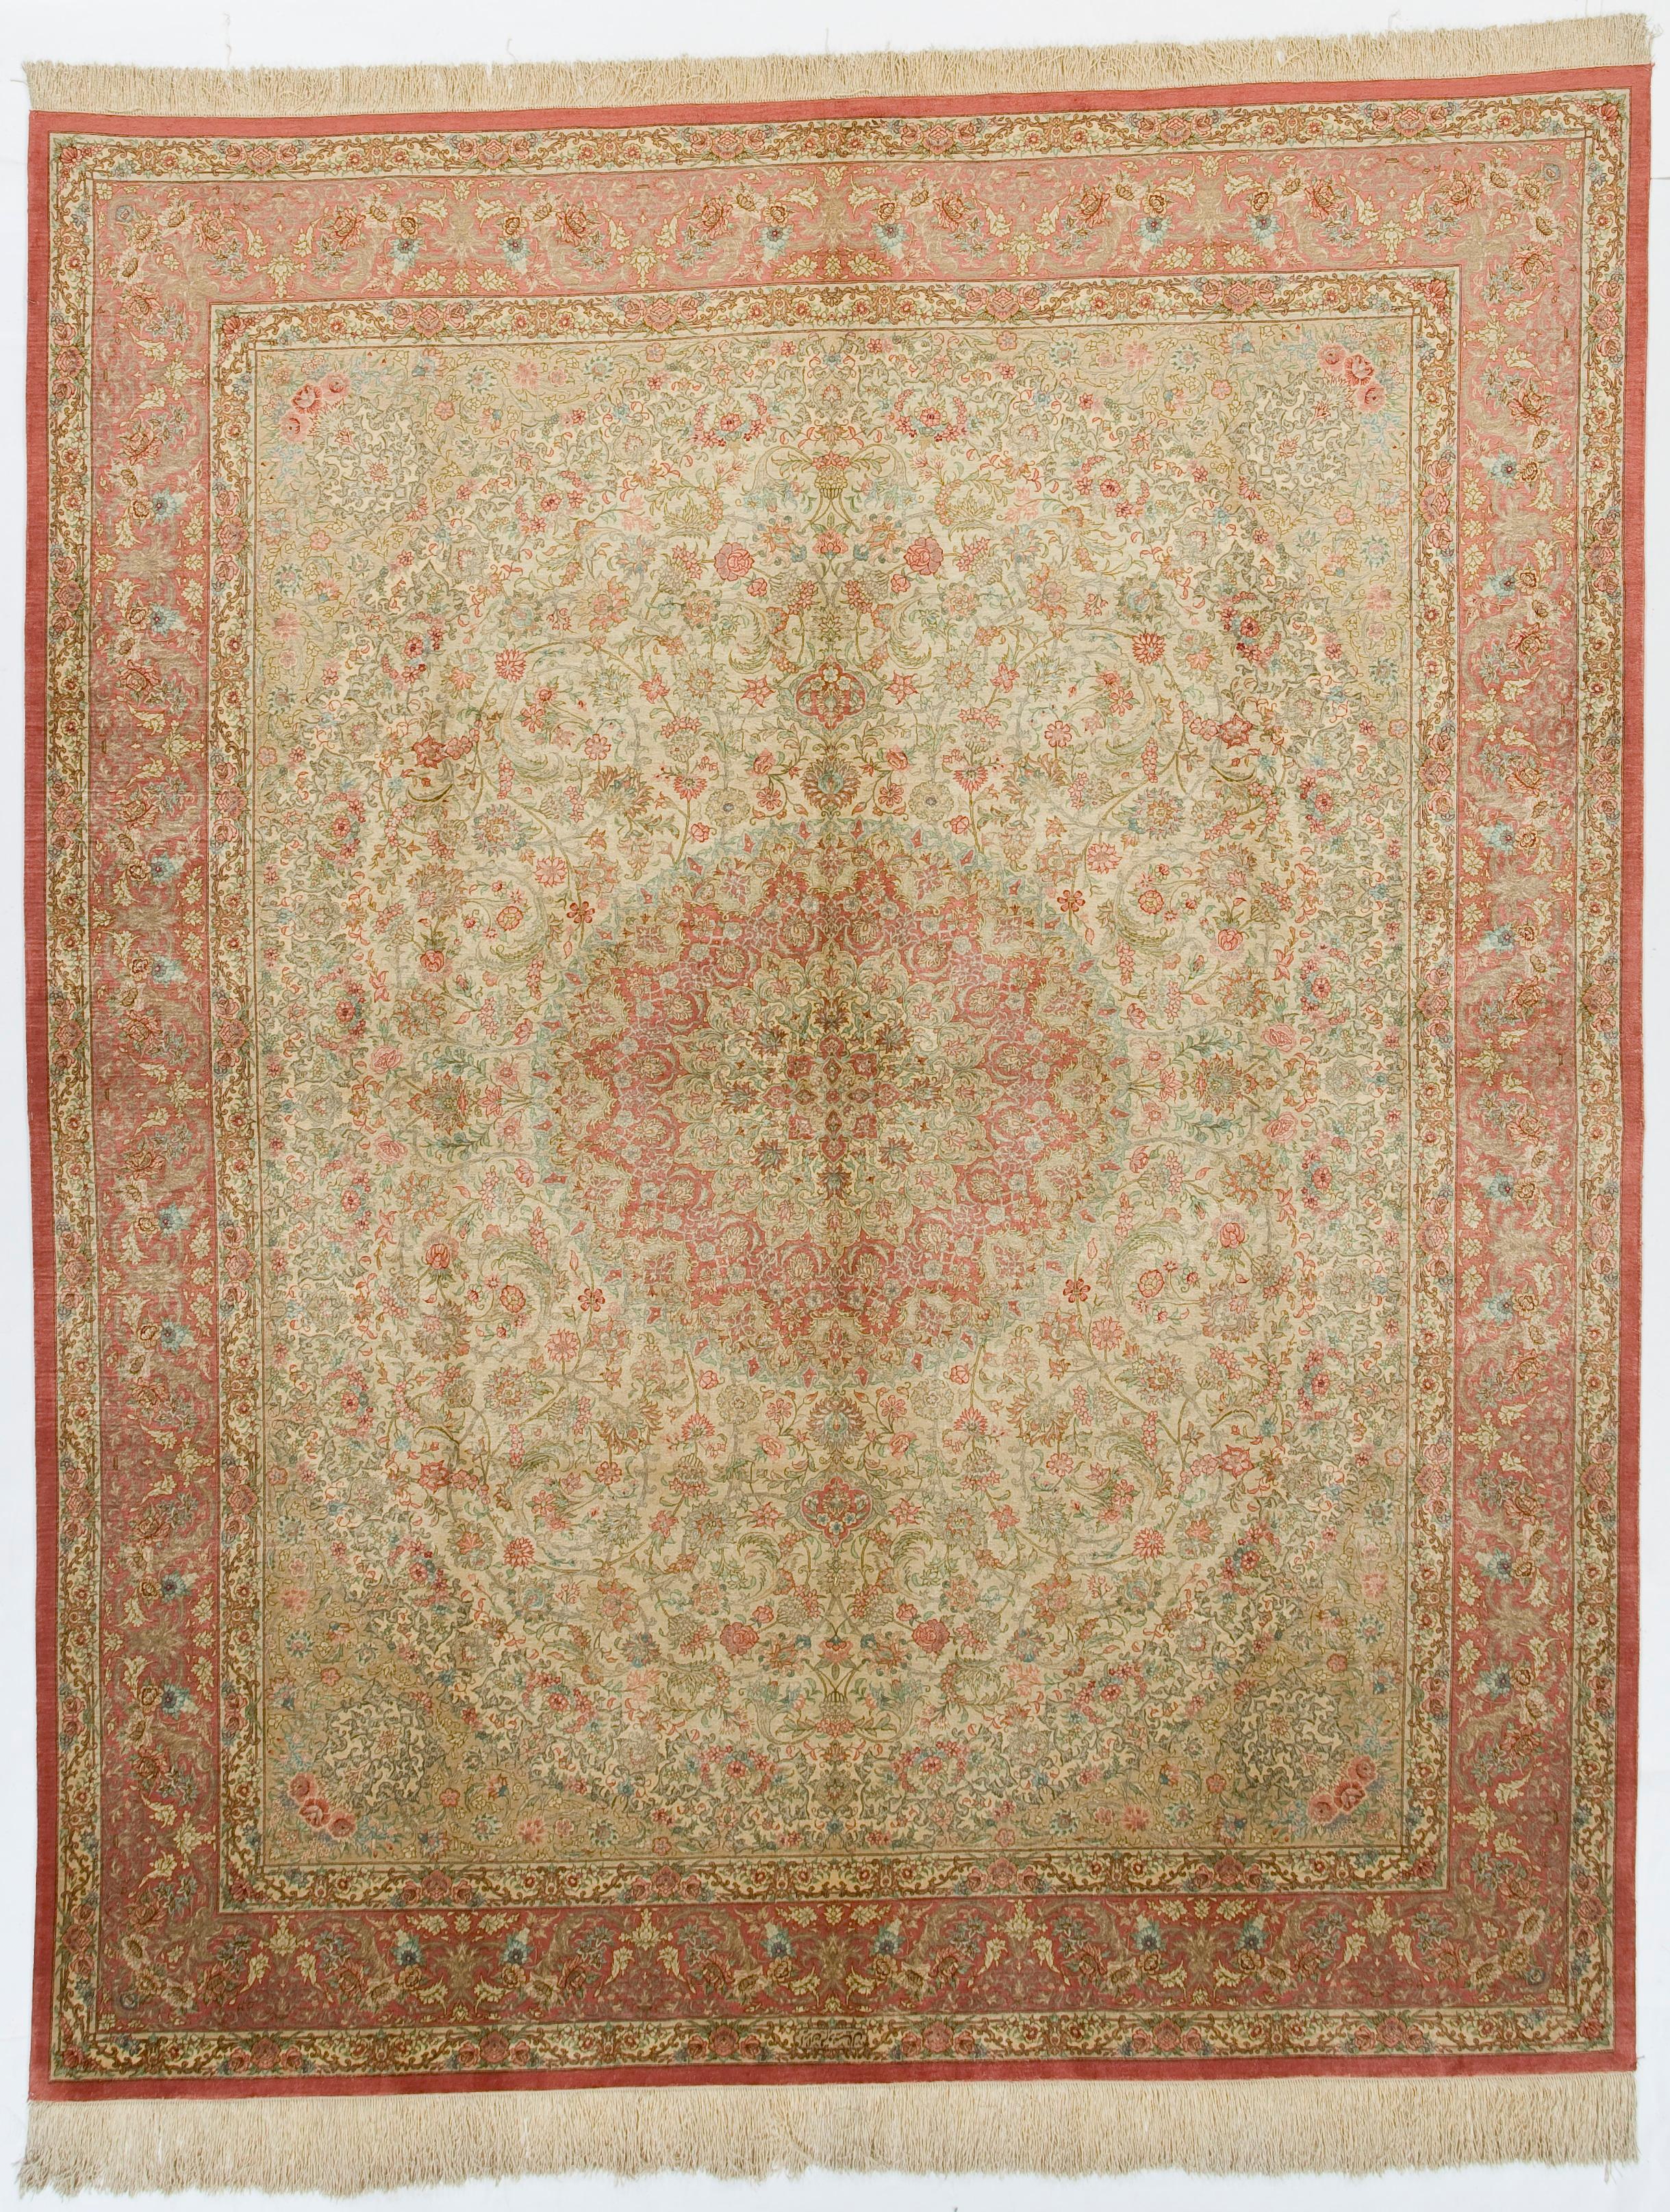 Silk Persian Qum rug measures 8'0'' x 10'0''.